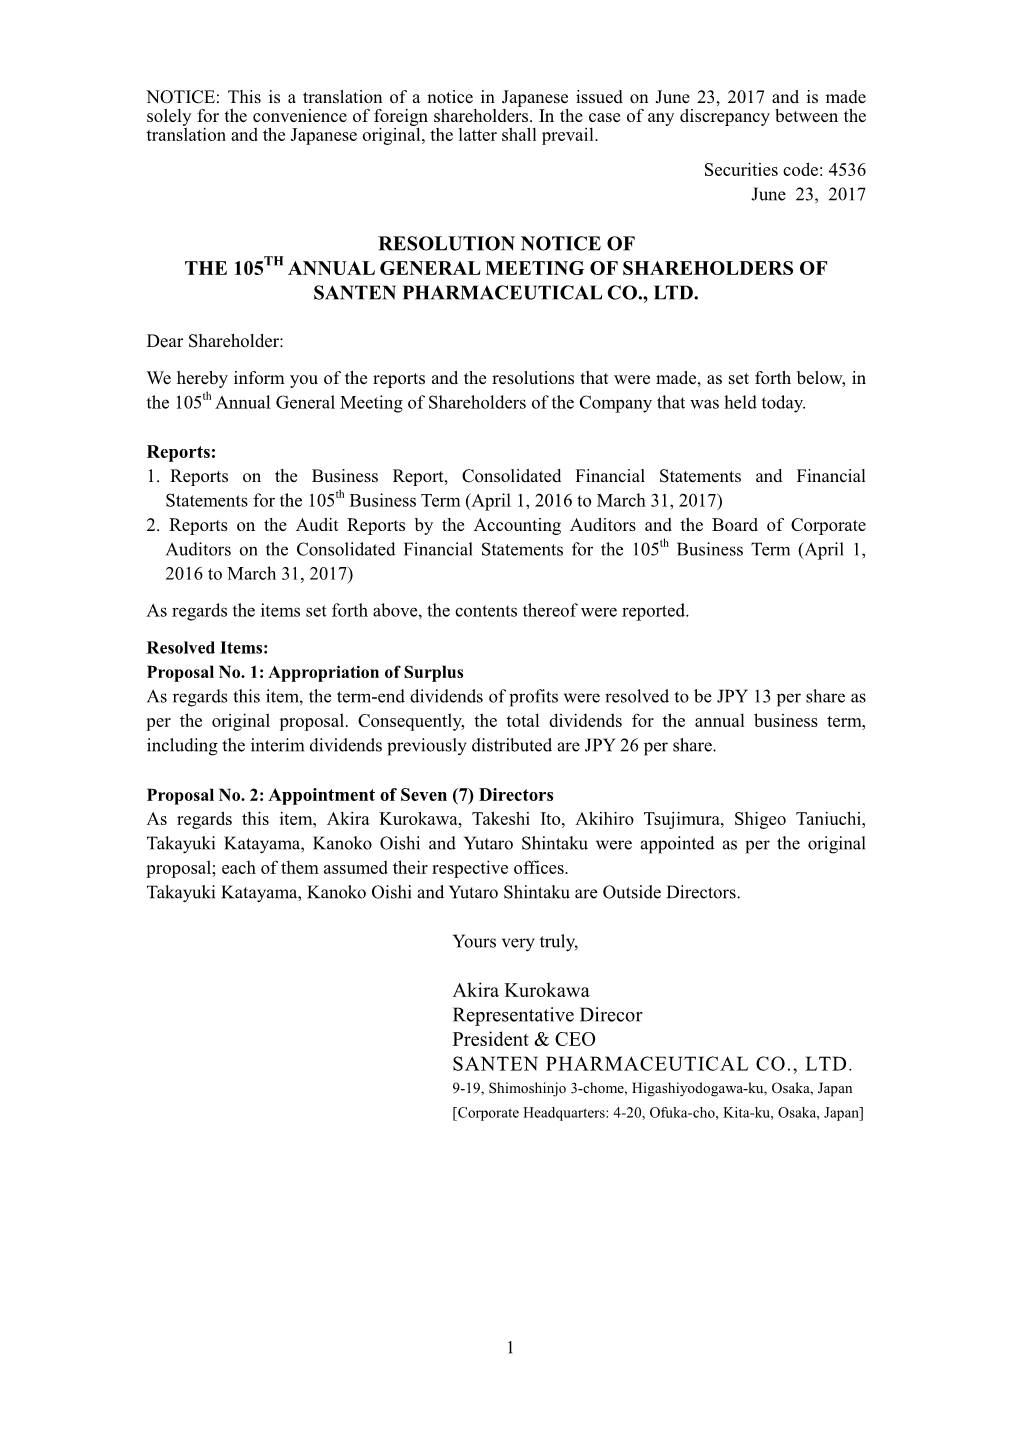 Resolution Notice (PDF: 67KB)